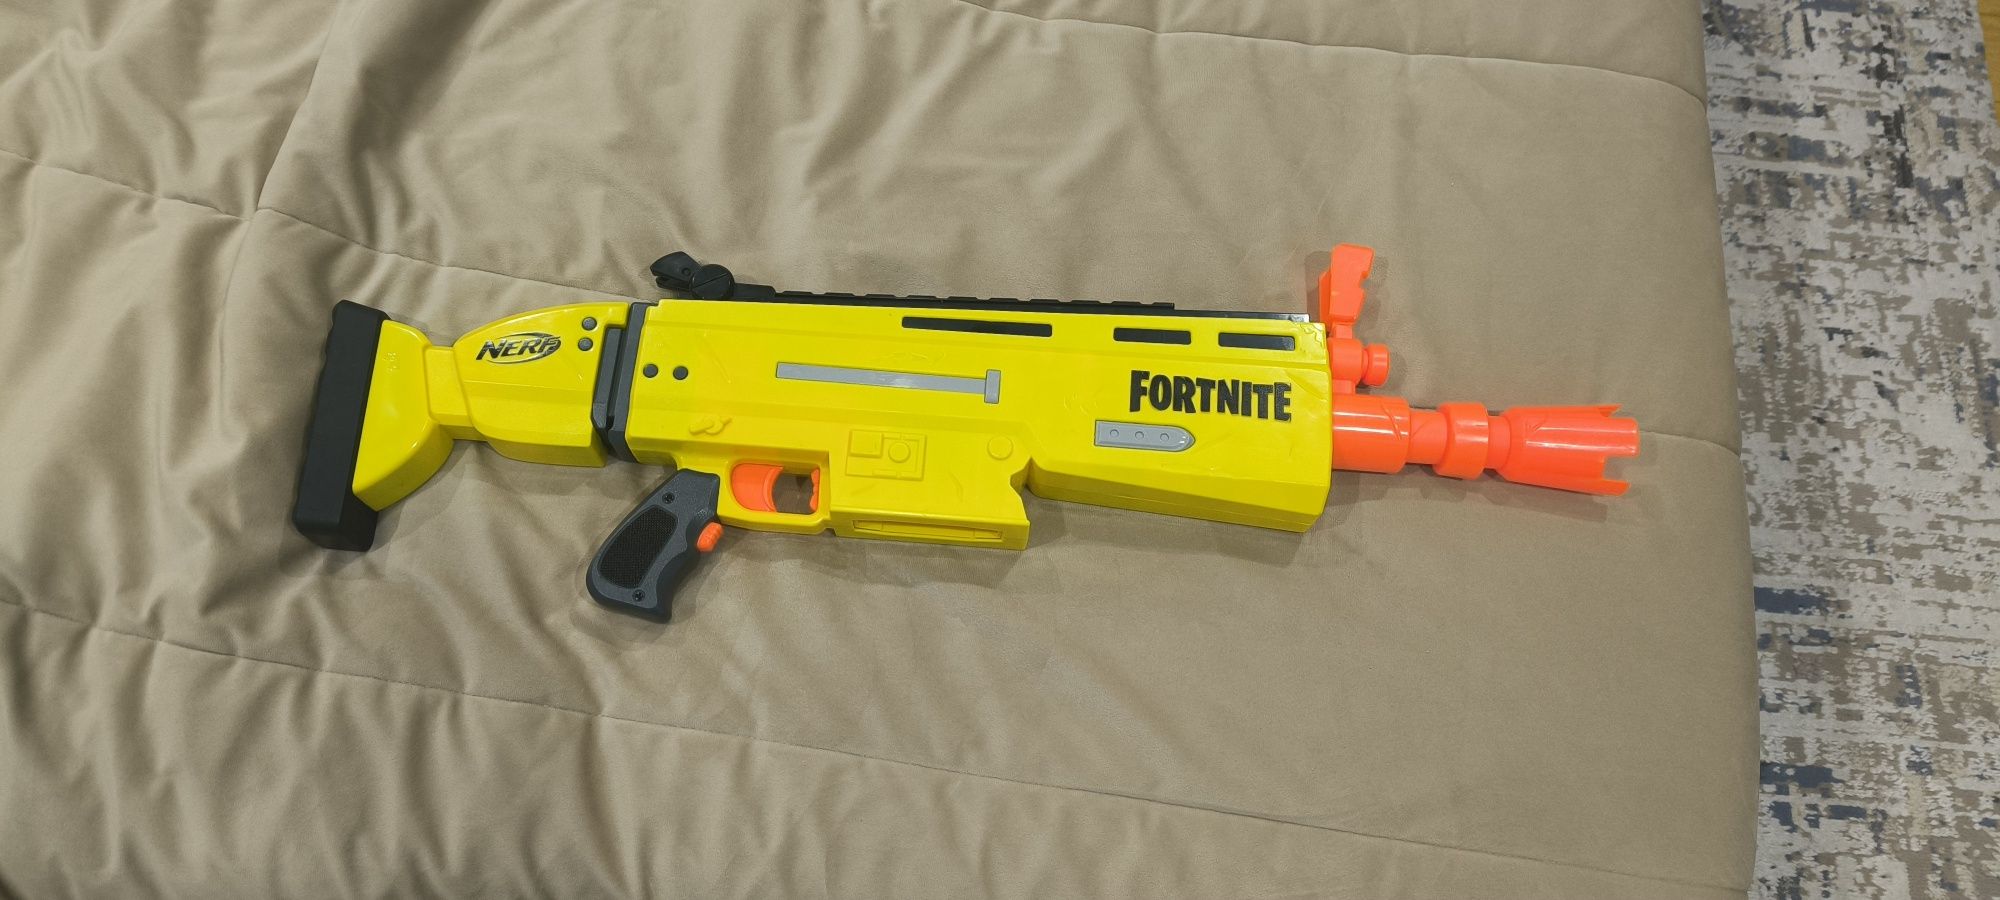 Pistola Nerf Fortnite